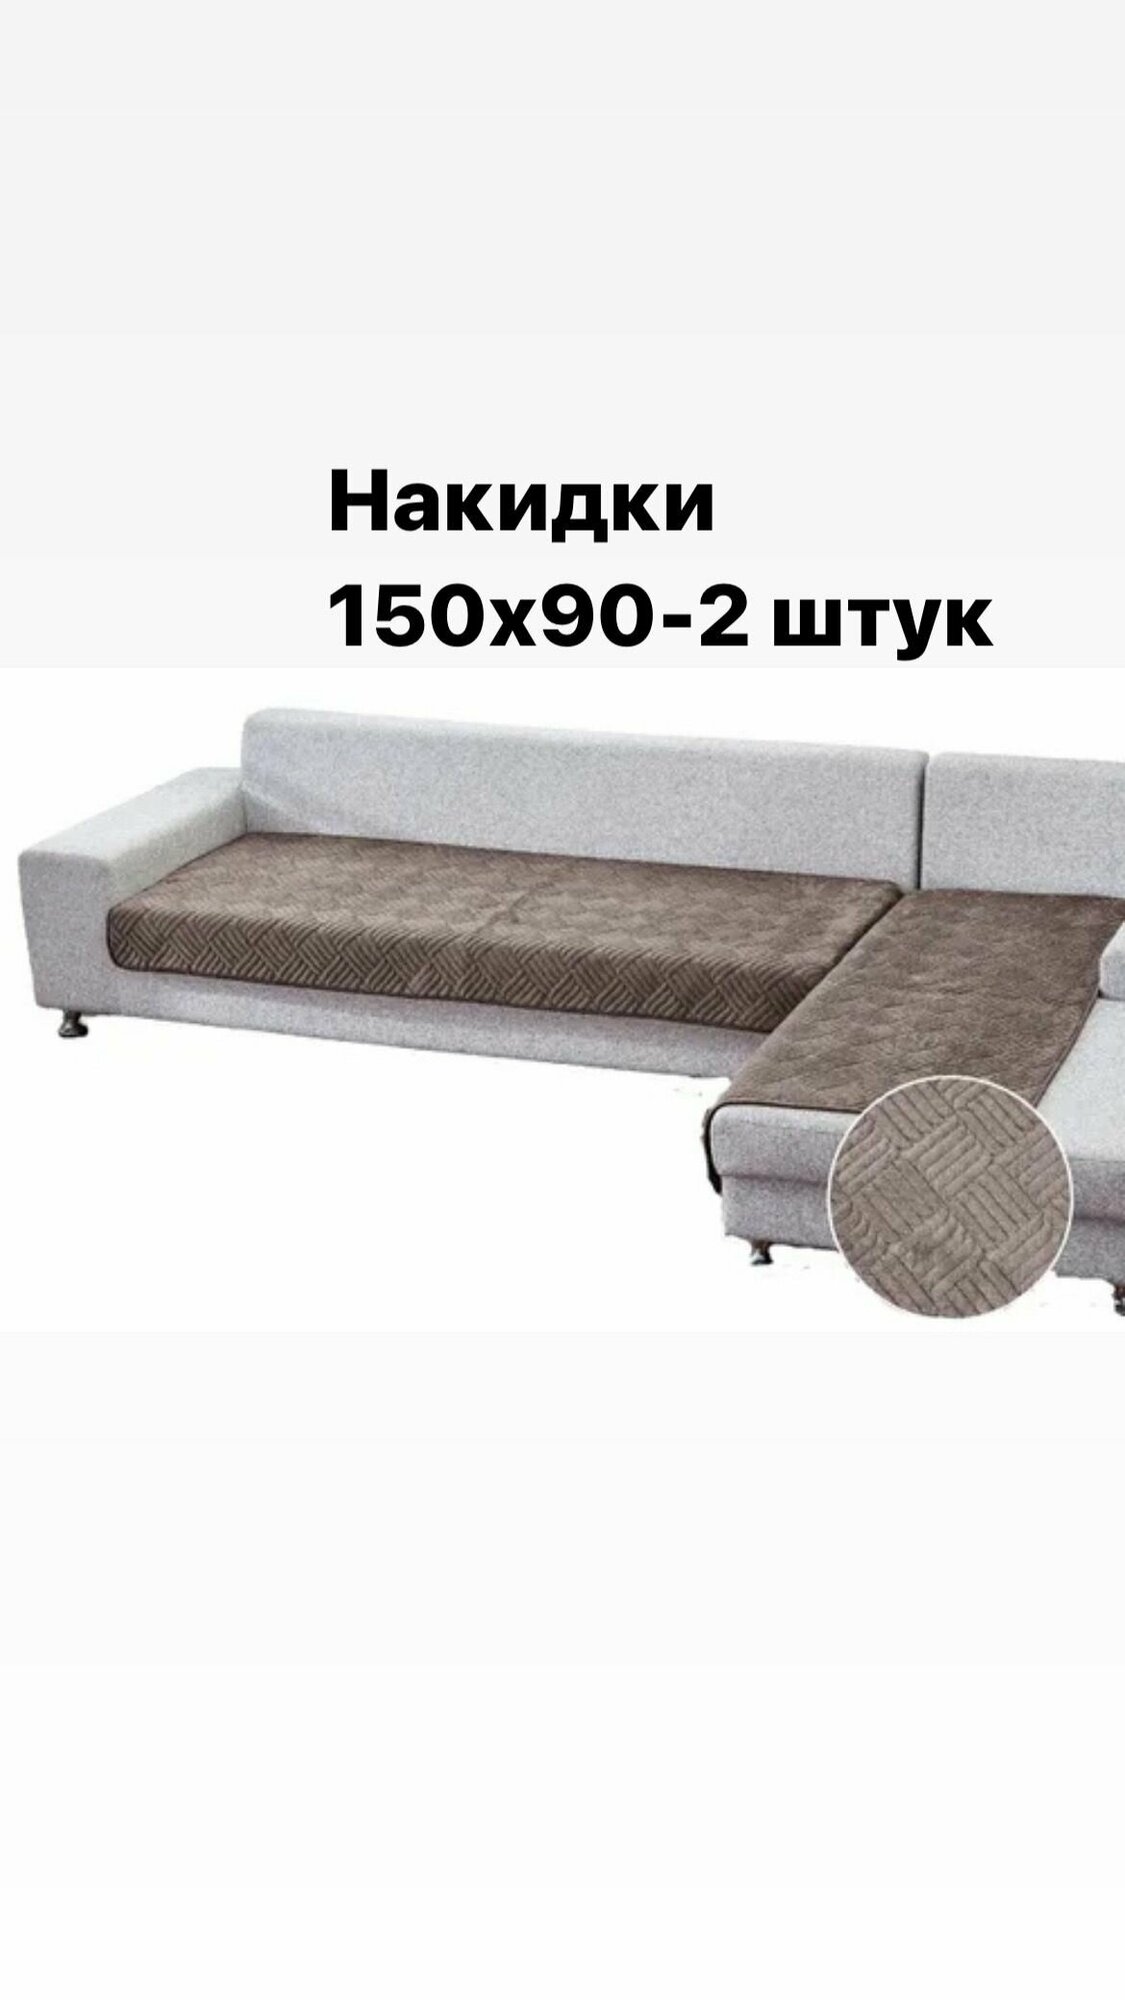 Дивандеки, накидки на угловой диван 90х150 см - 2 шт, чехол на угловой диван, покрывало на угловой диван, чехлы для мебели